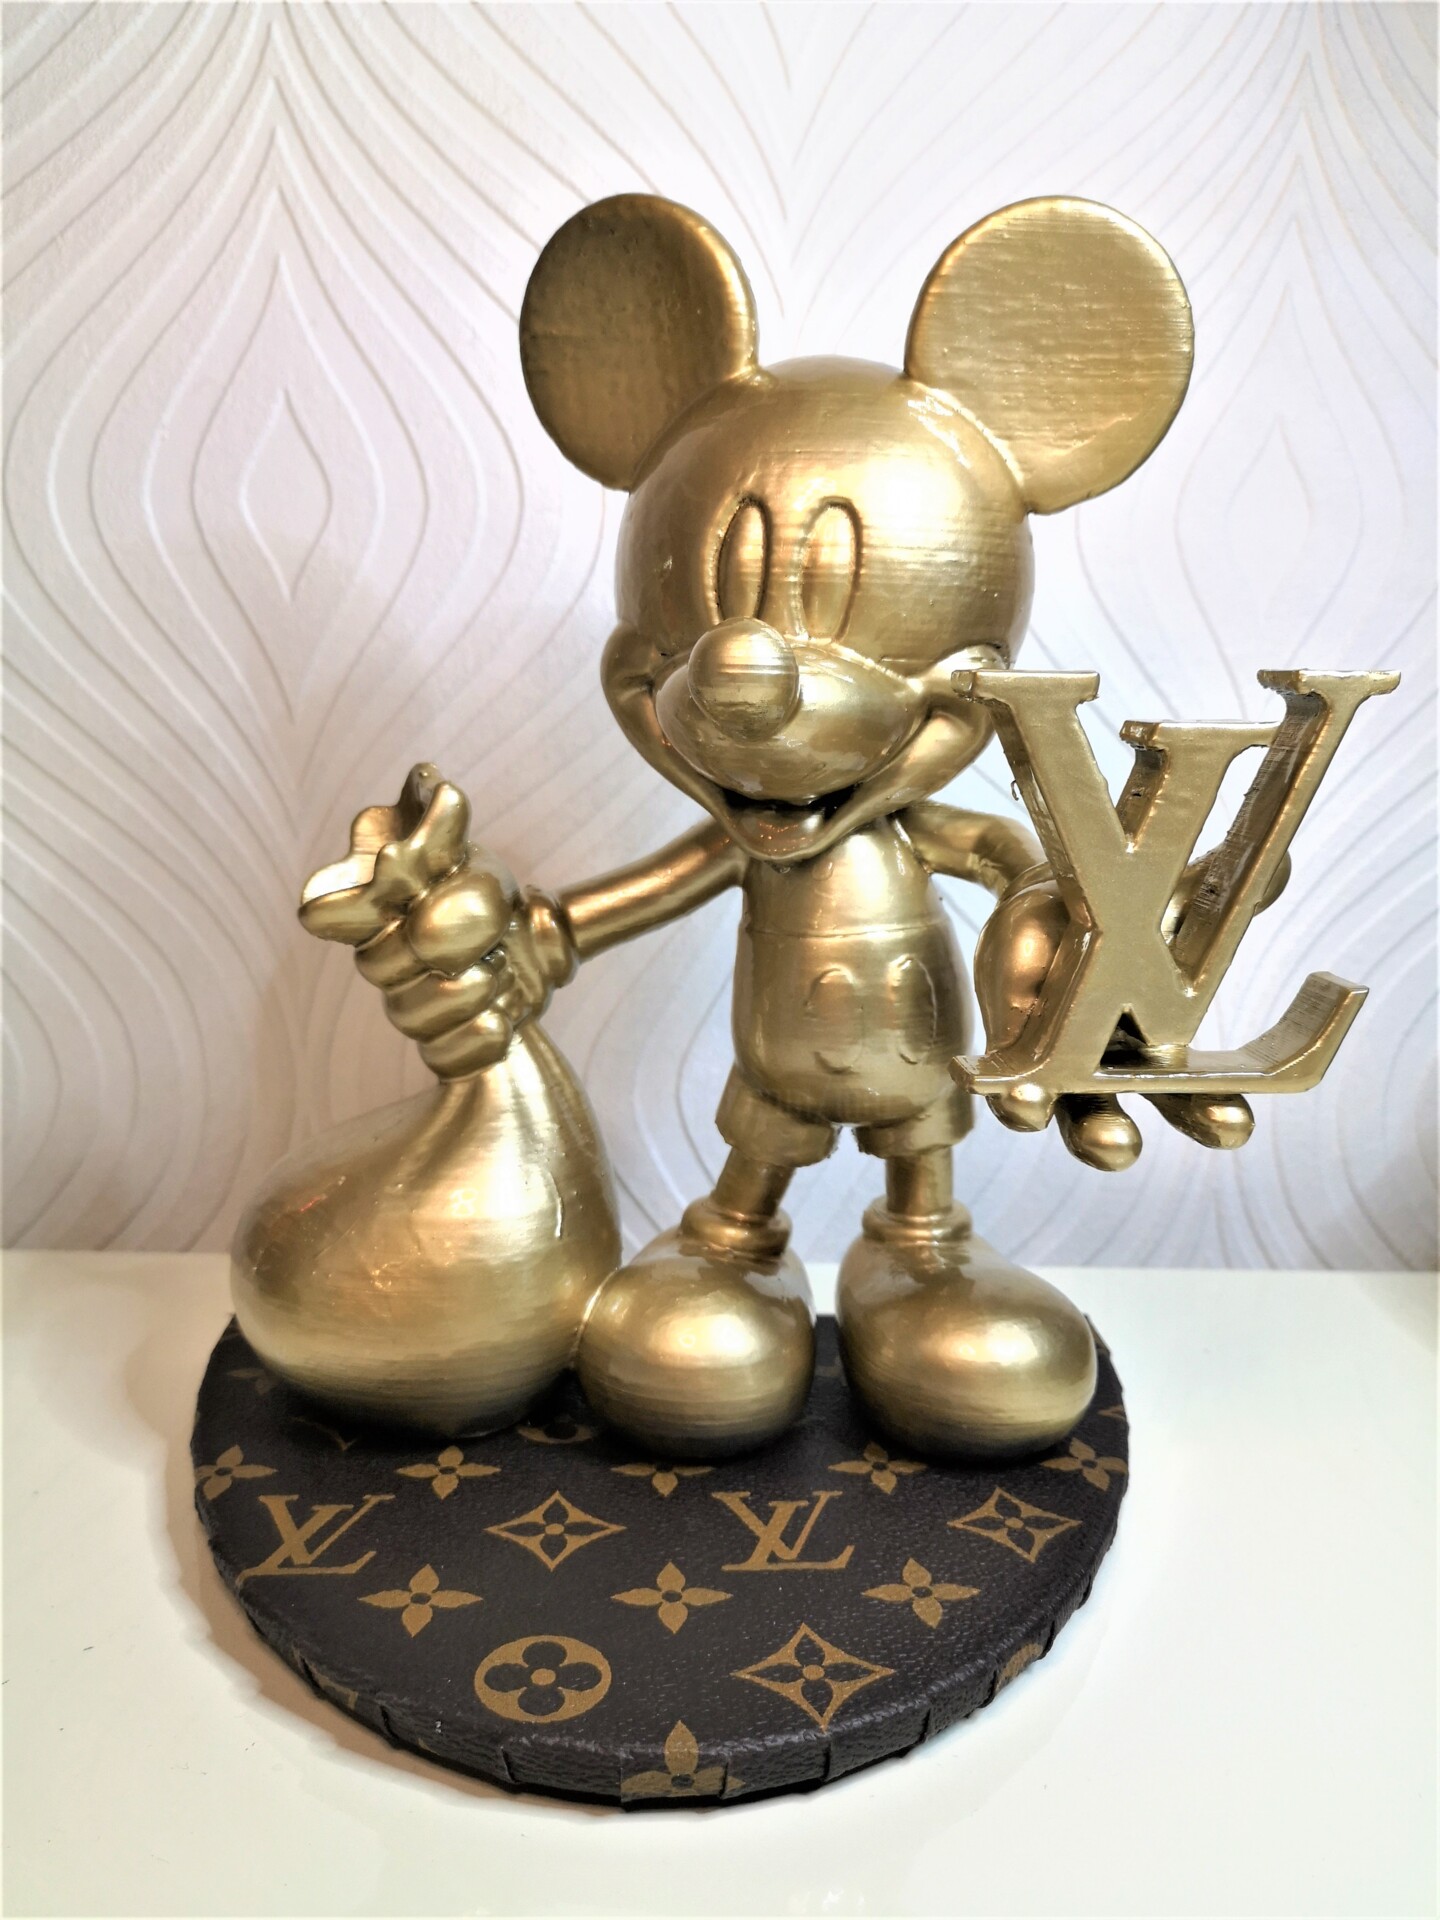 Louis Vuitton Mickey 